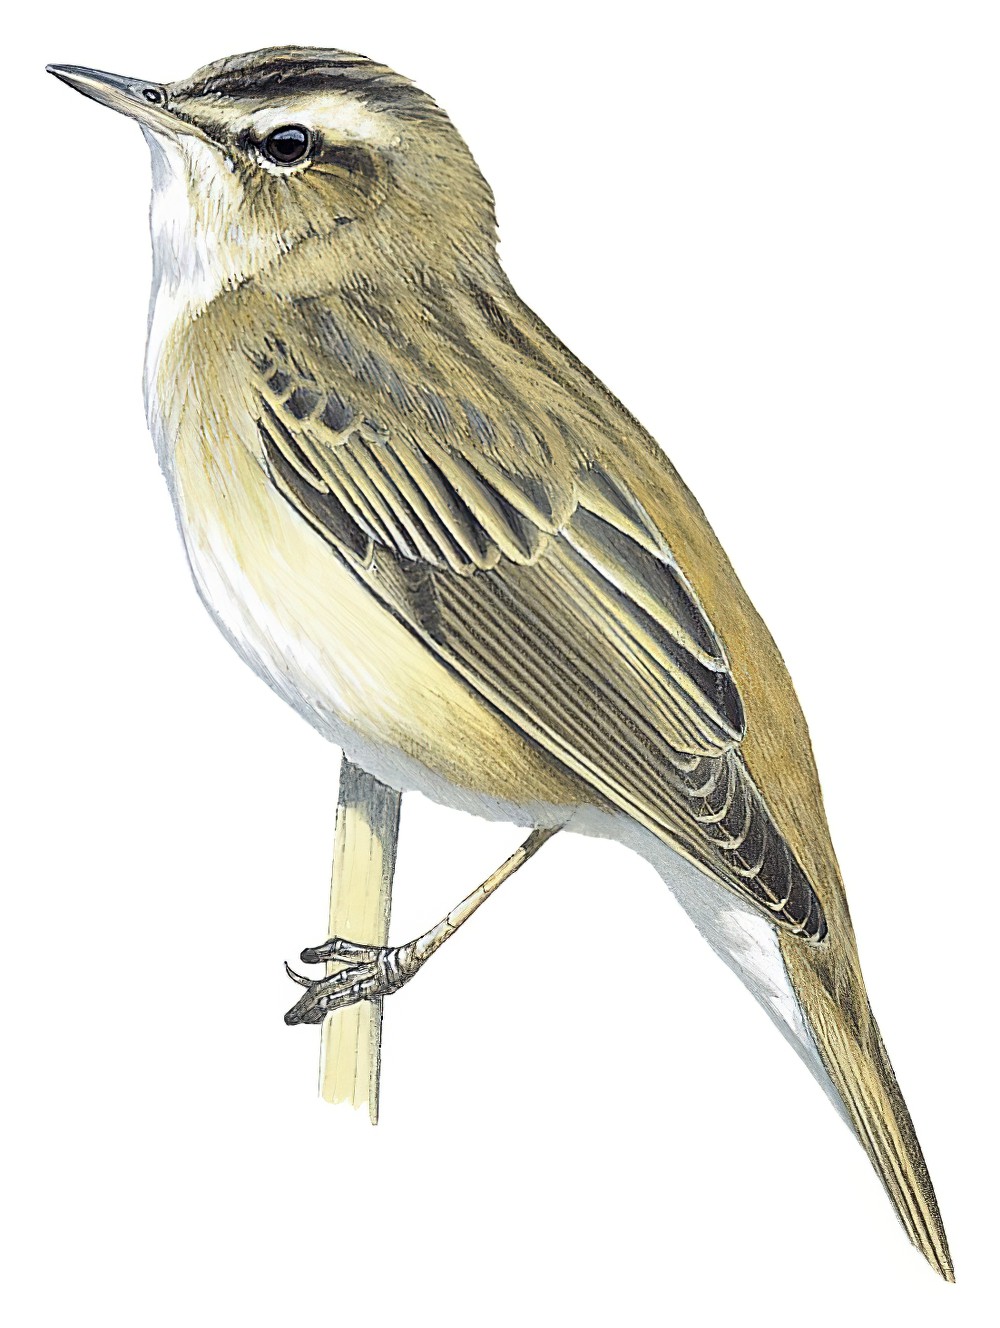 Sedge Warbler / Acrocephalus schoenobaenus